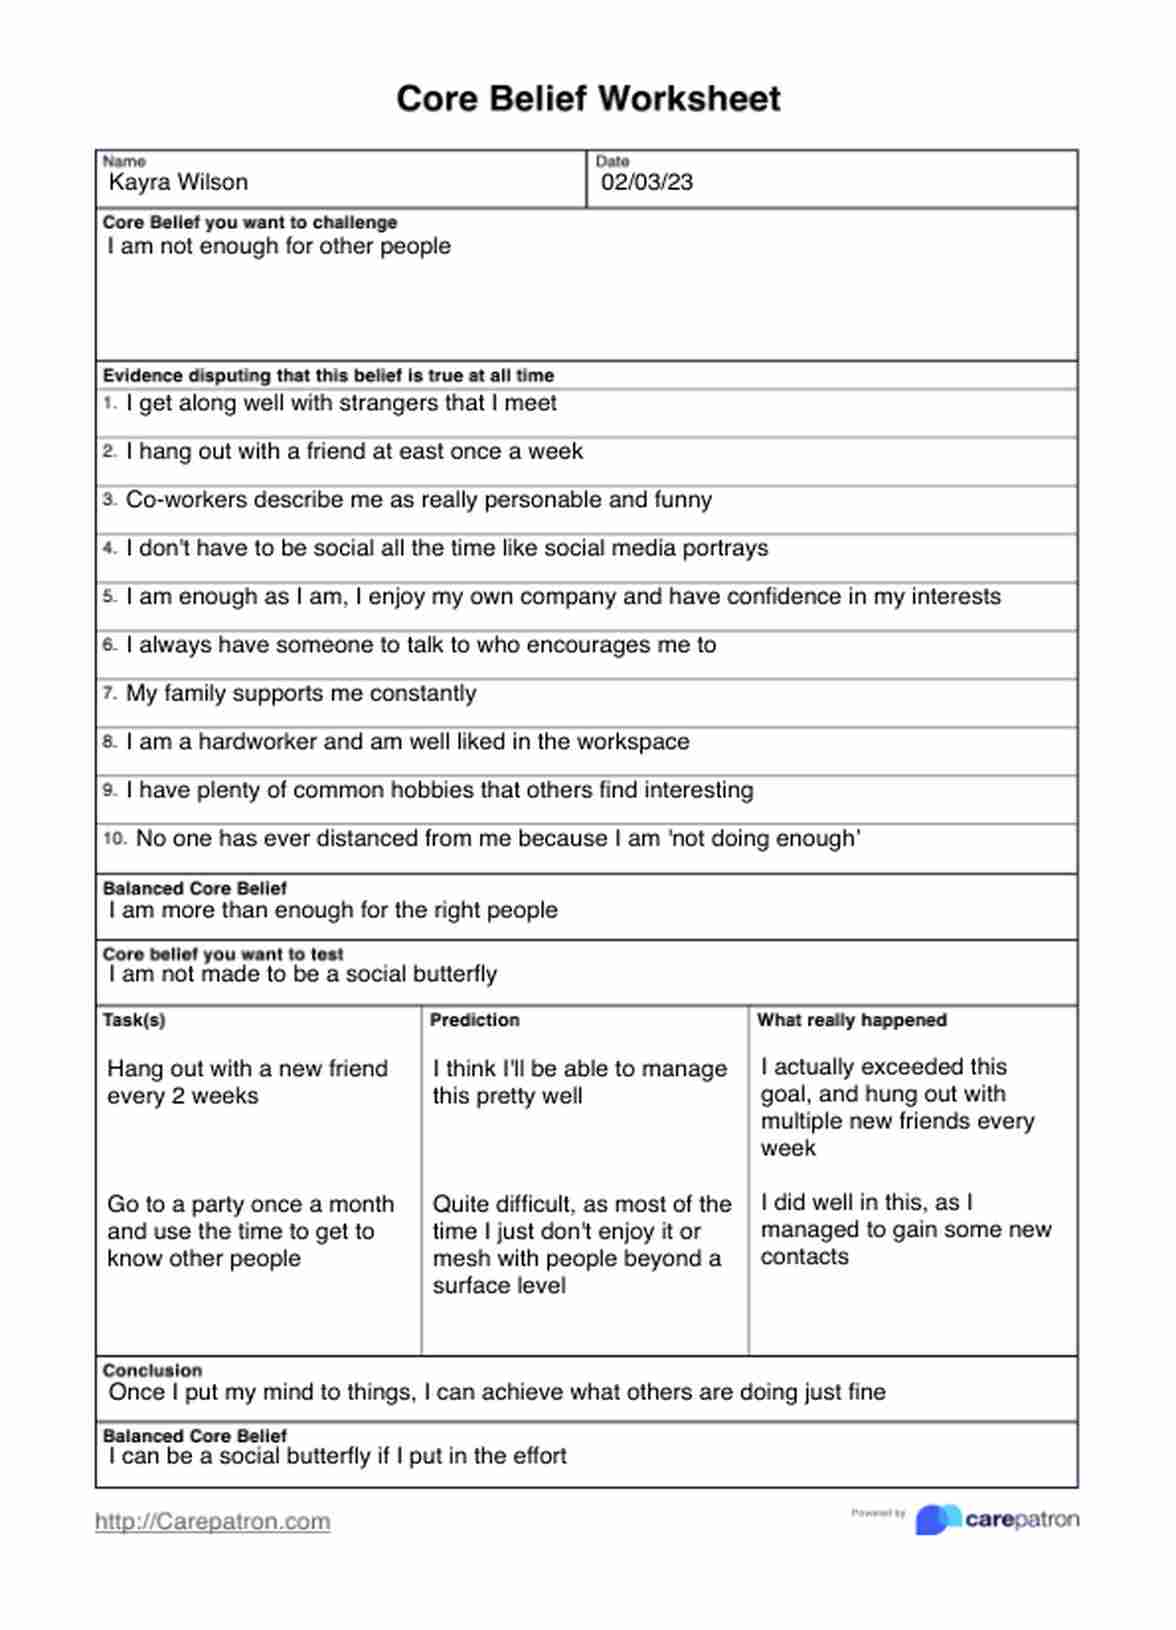 Core Beliefs Worksheets PDF Example